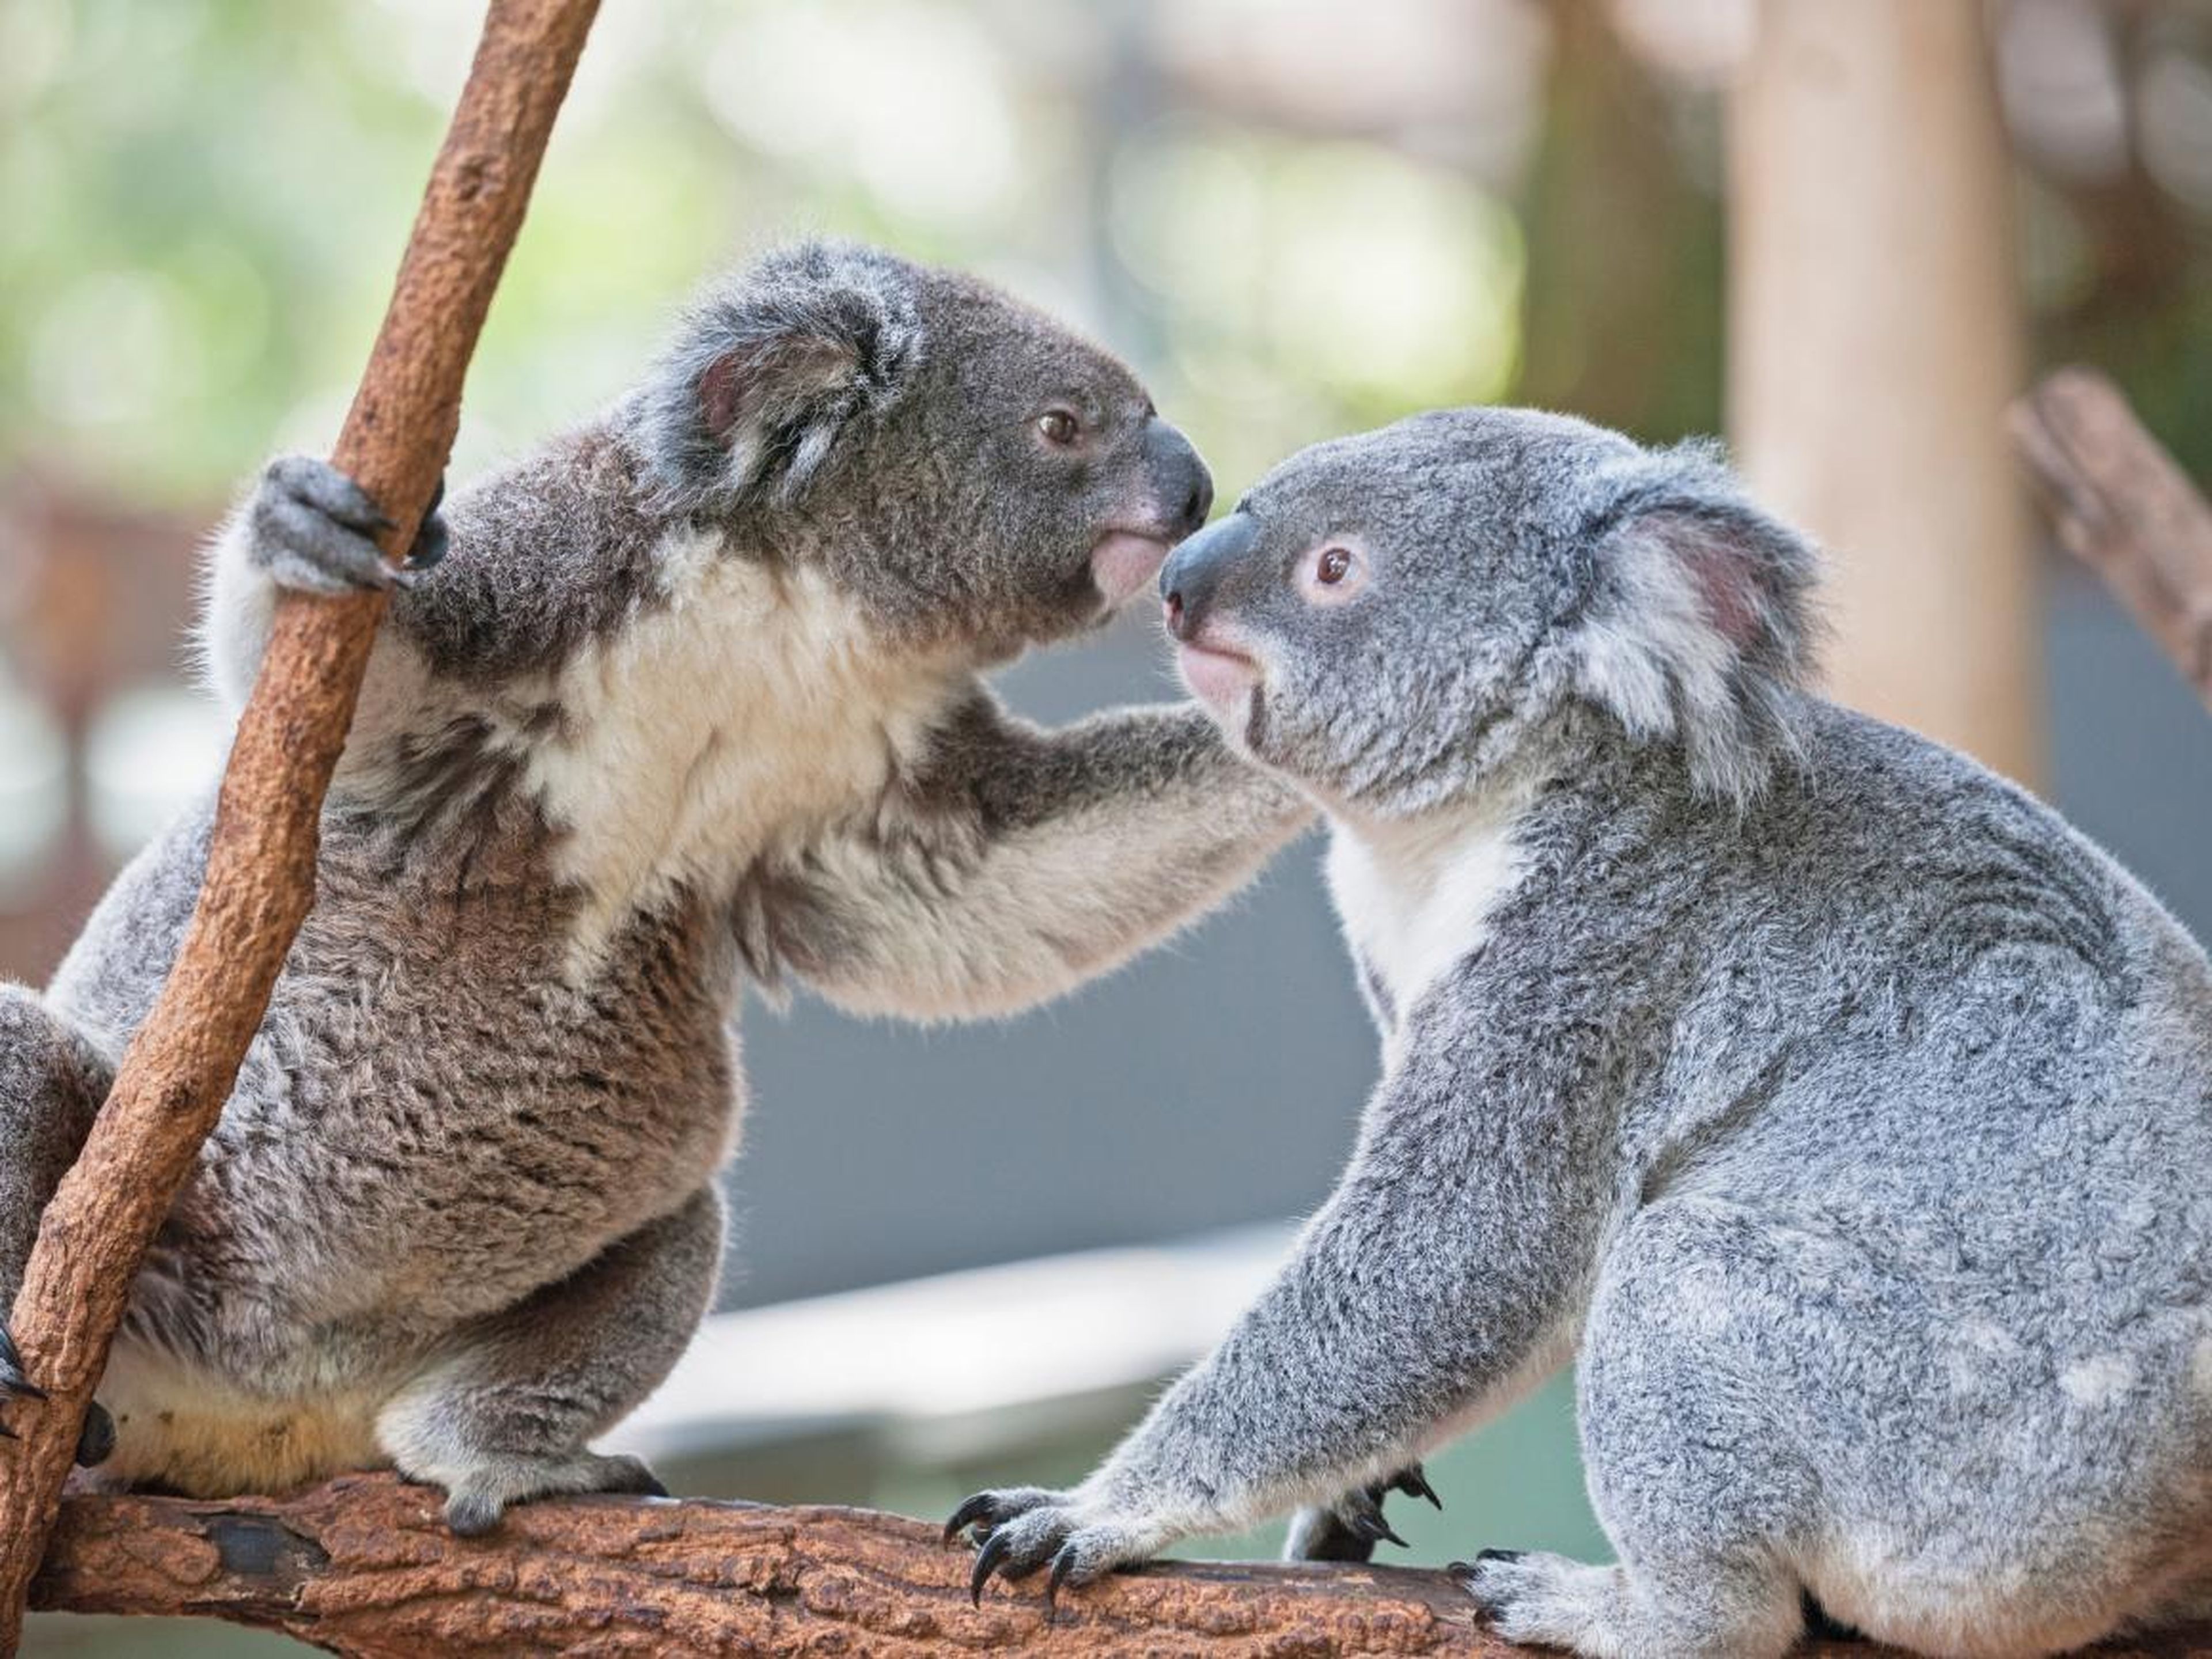 Este koala está ayudando a su amigo a arreglarse.